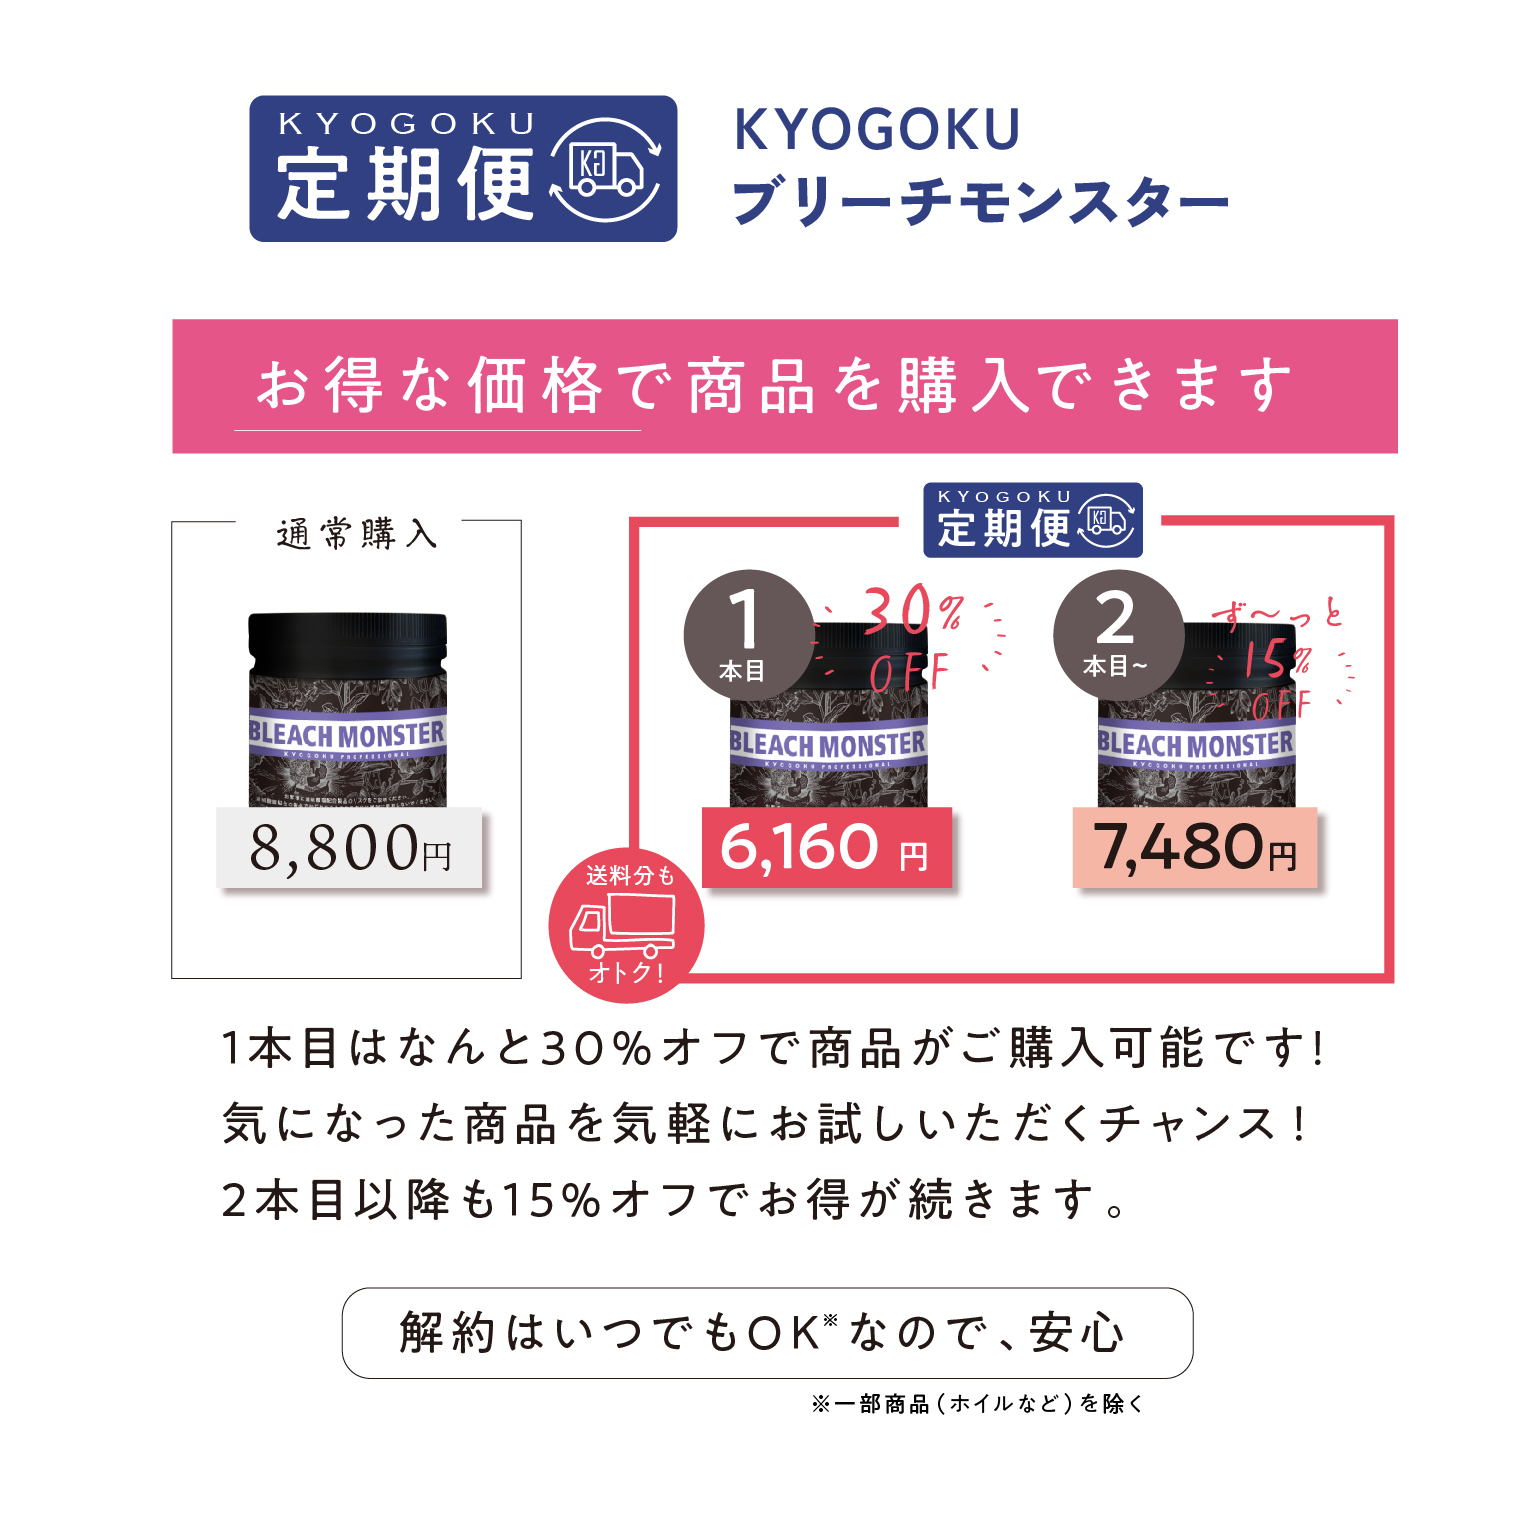 Kyogoku Professional / KYOGOKU ブリーチモンスター お得なお届け便